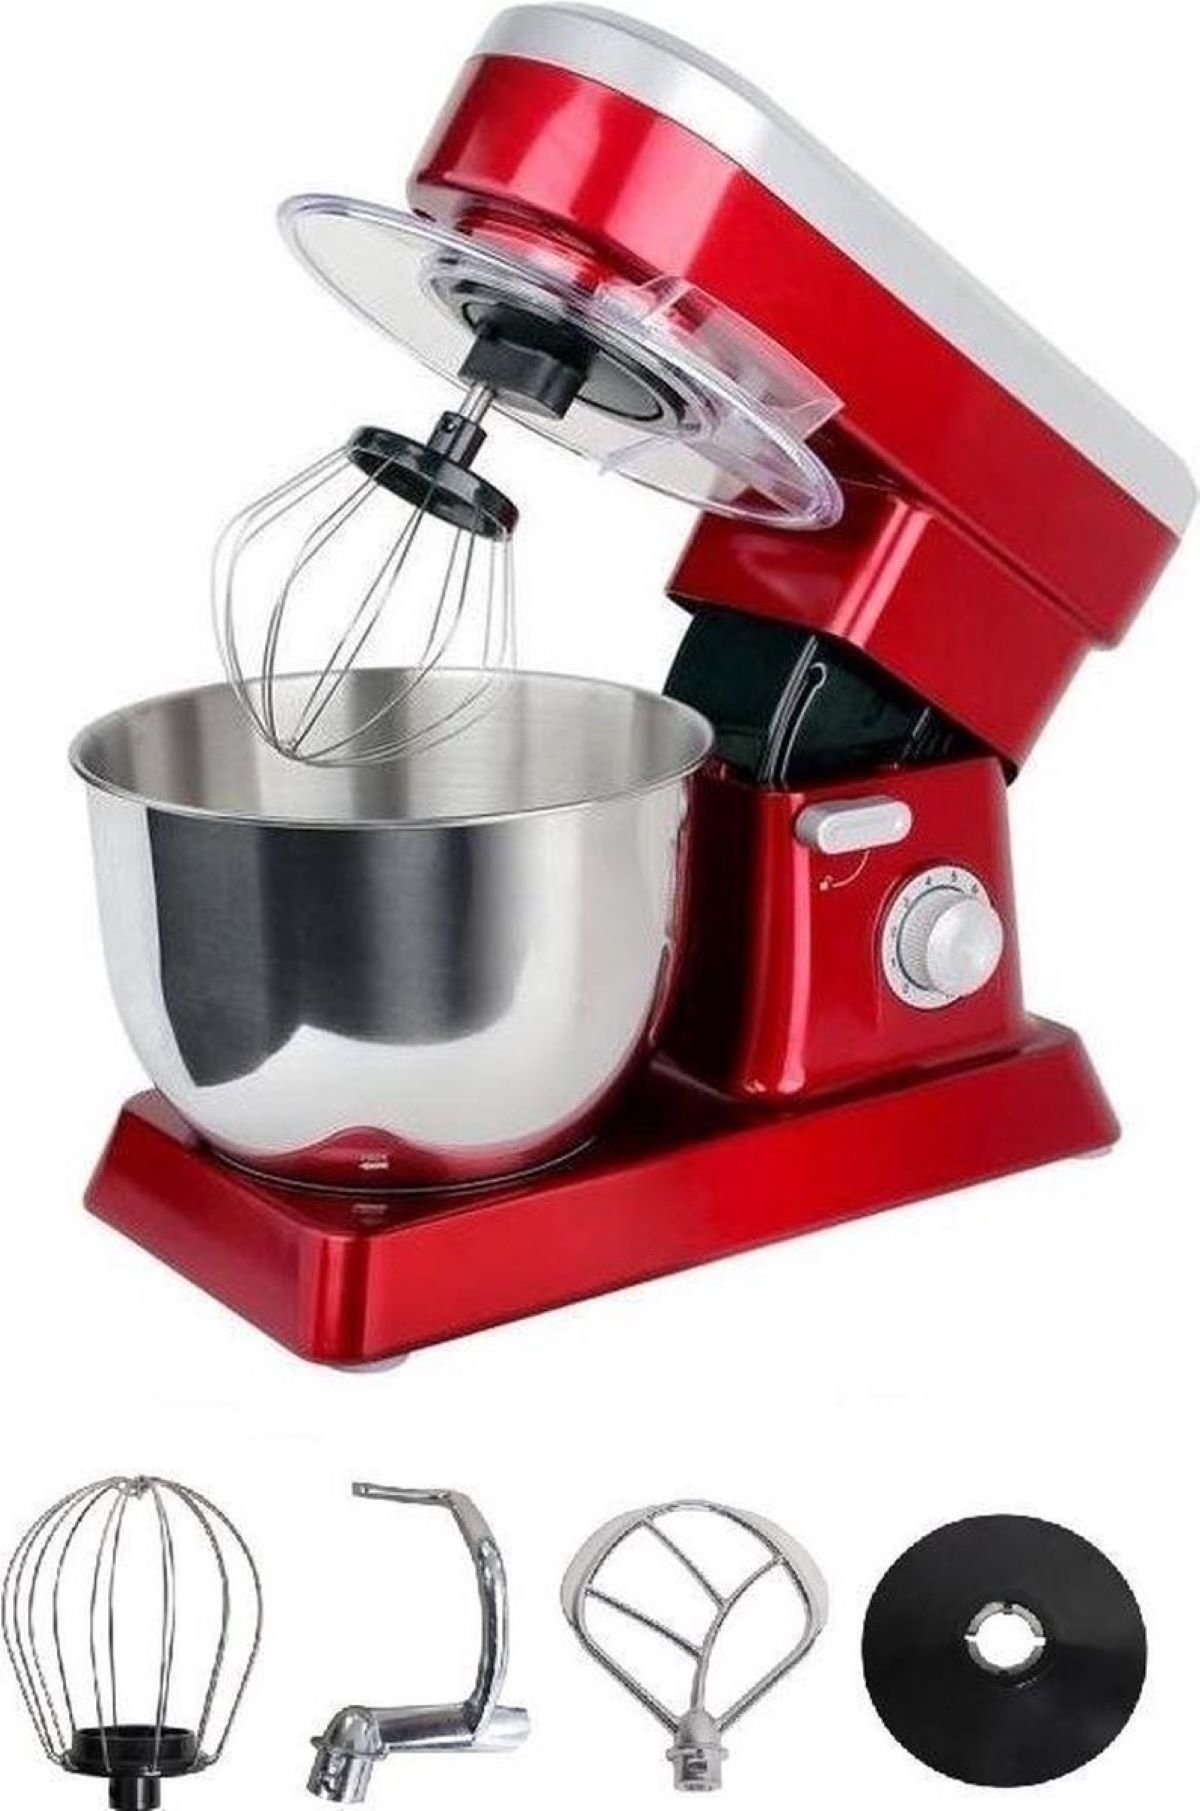 Royal Swiss Küchenmaschine, Royal Swiss Küchenmaschine- 10-stufige Küchenmaschine 6,3 Liter Rot | Multifunktionsküchenmaschinen